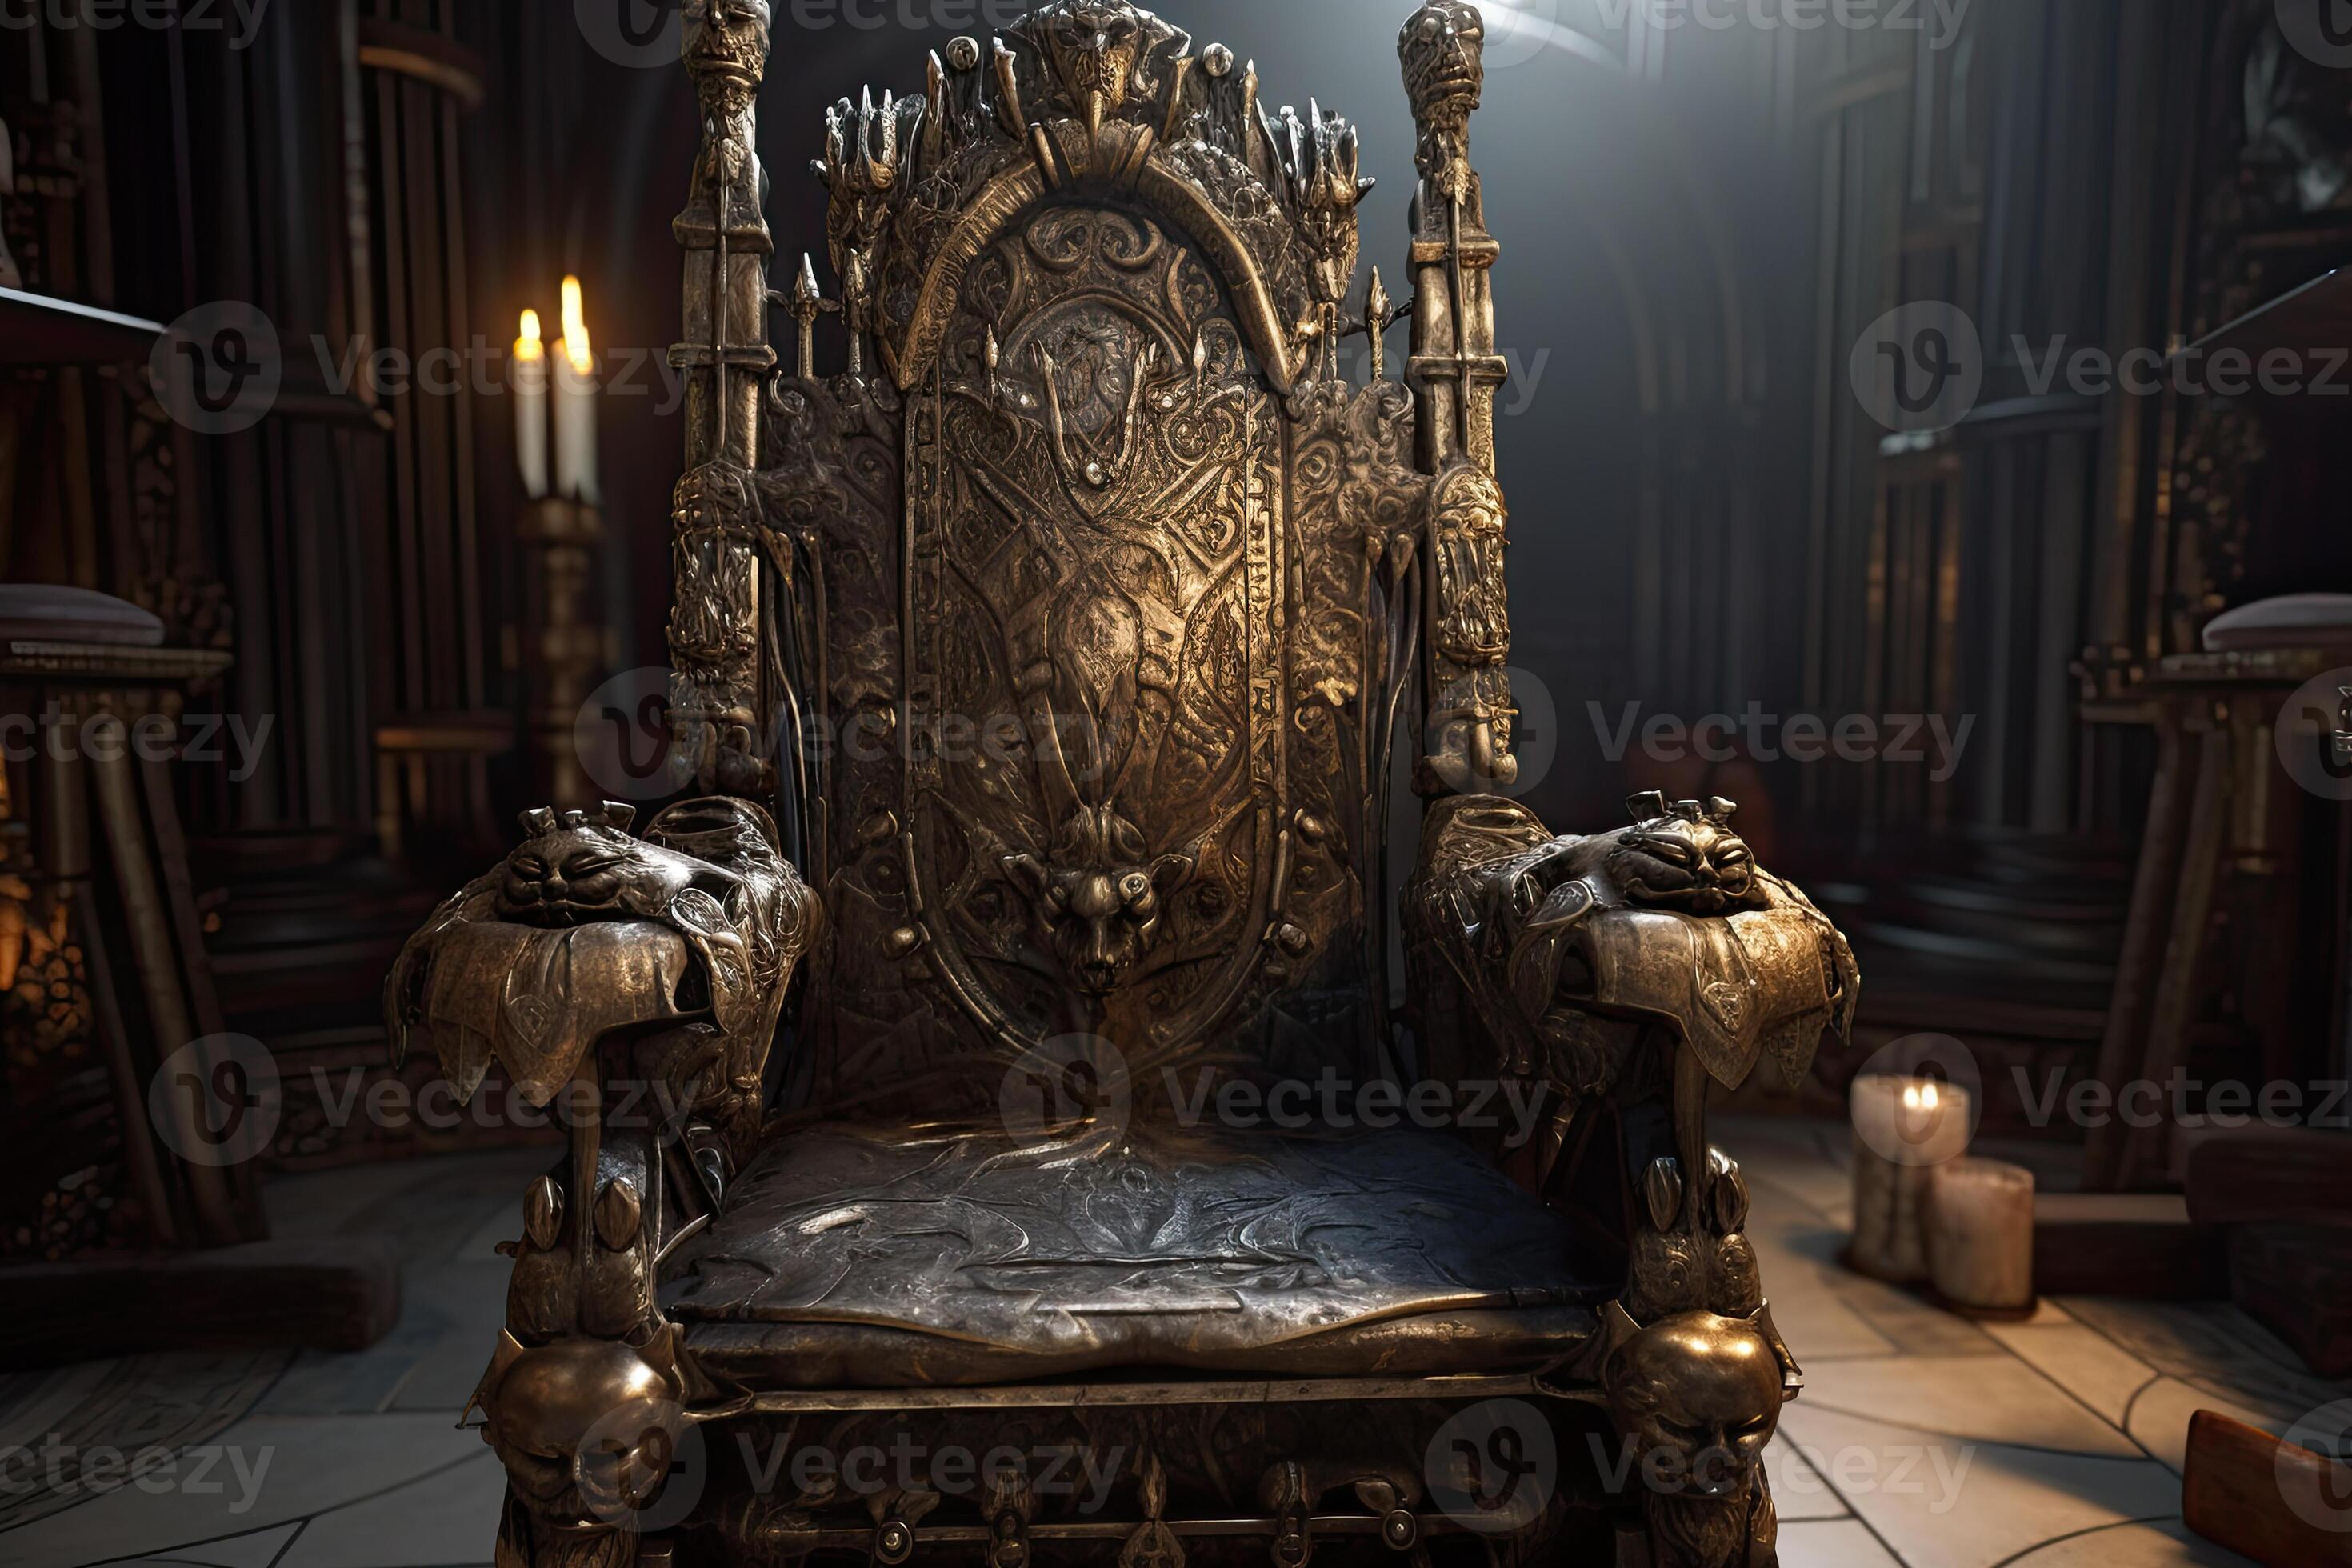 Empty royal throne in dark castle hall. Fantasy medieval throne